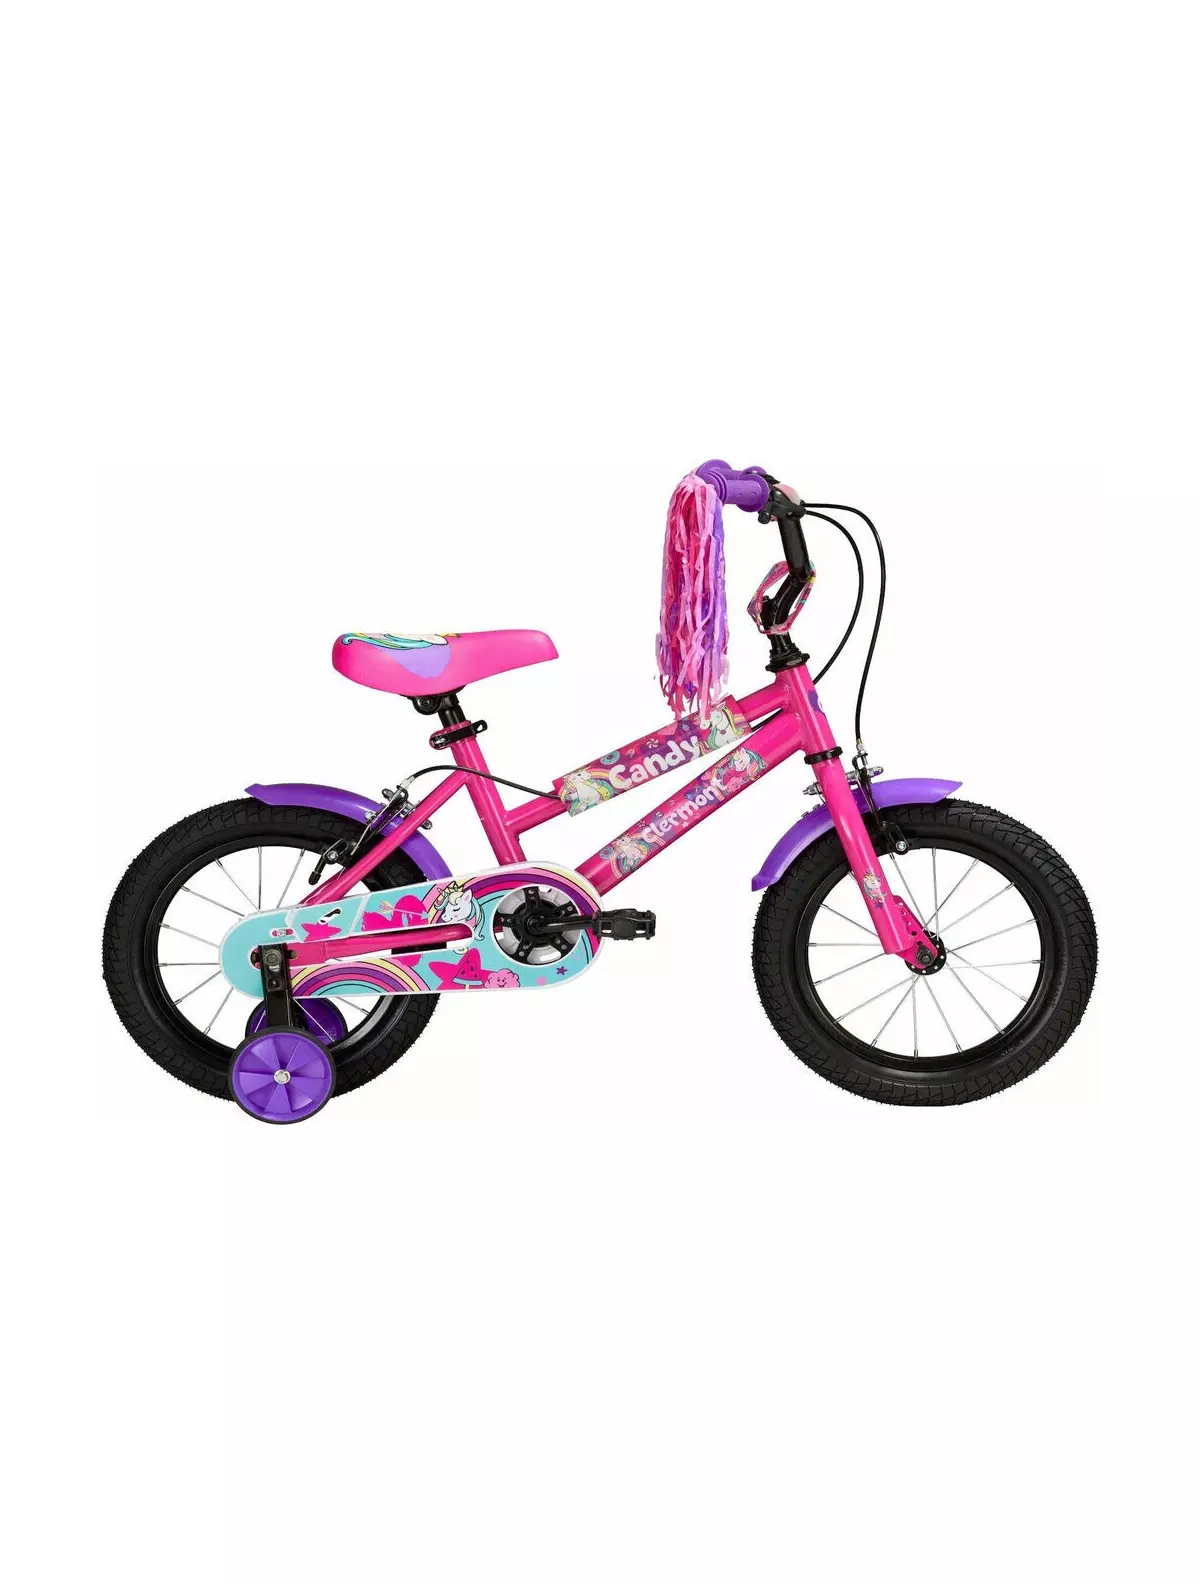 Bicicleta copii Clermont Candy 16  -Roz